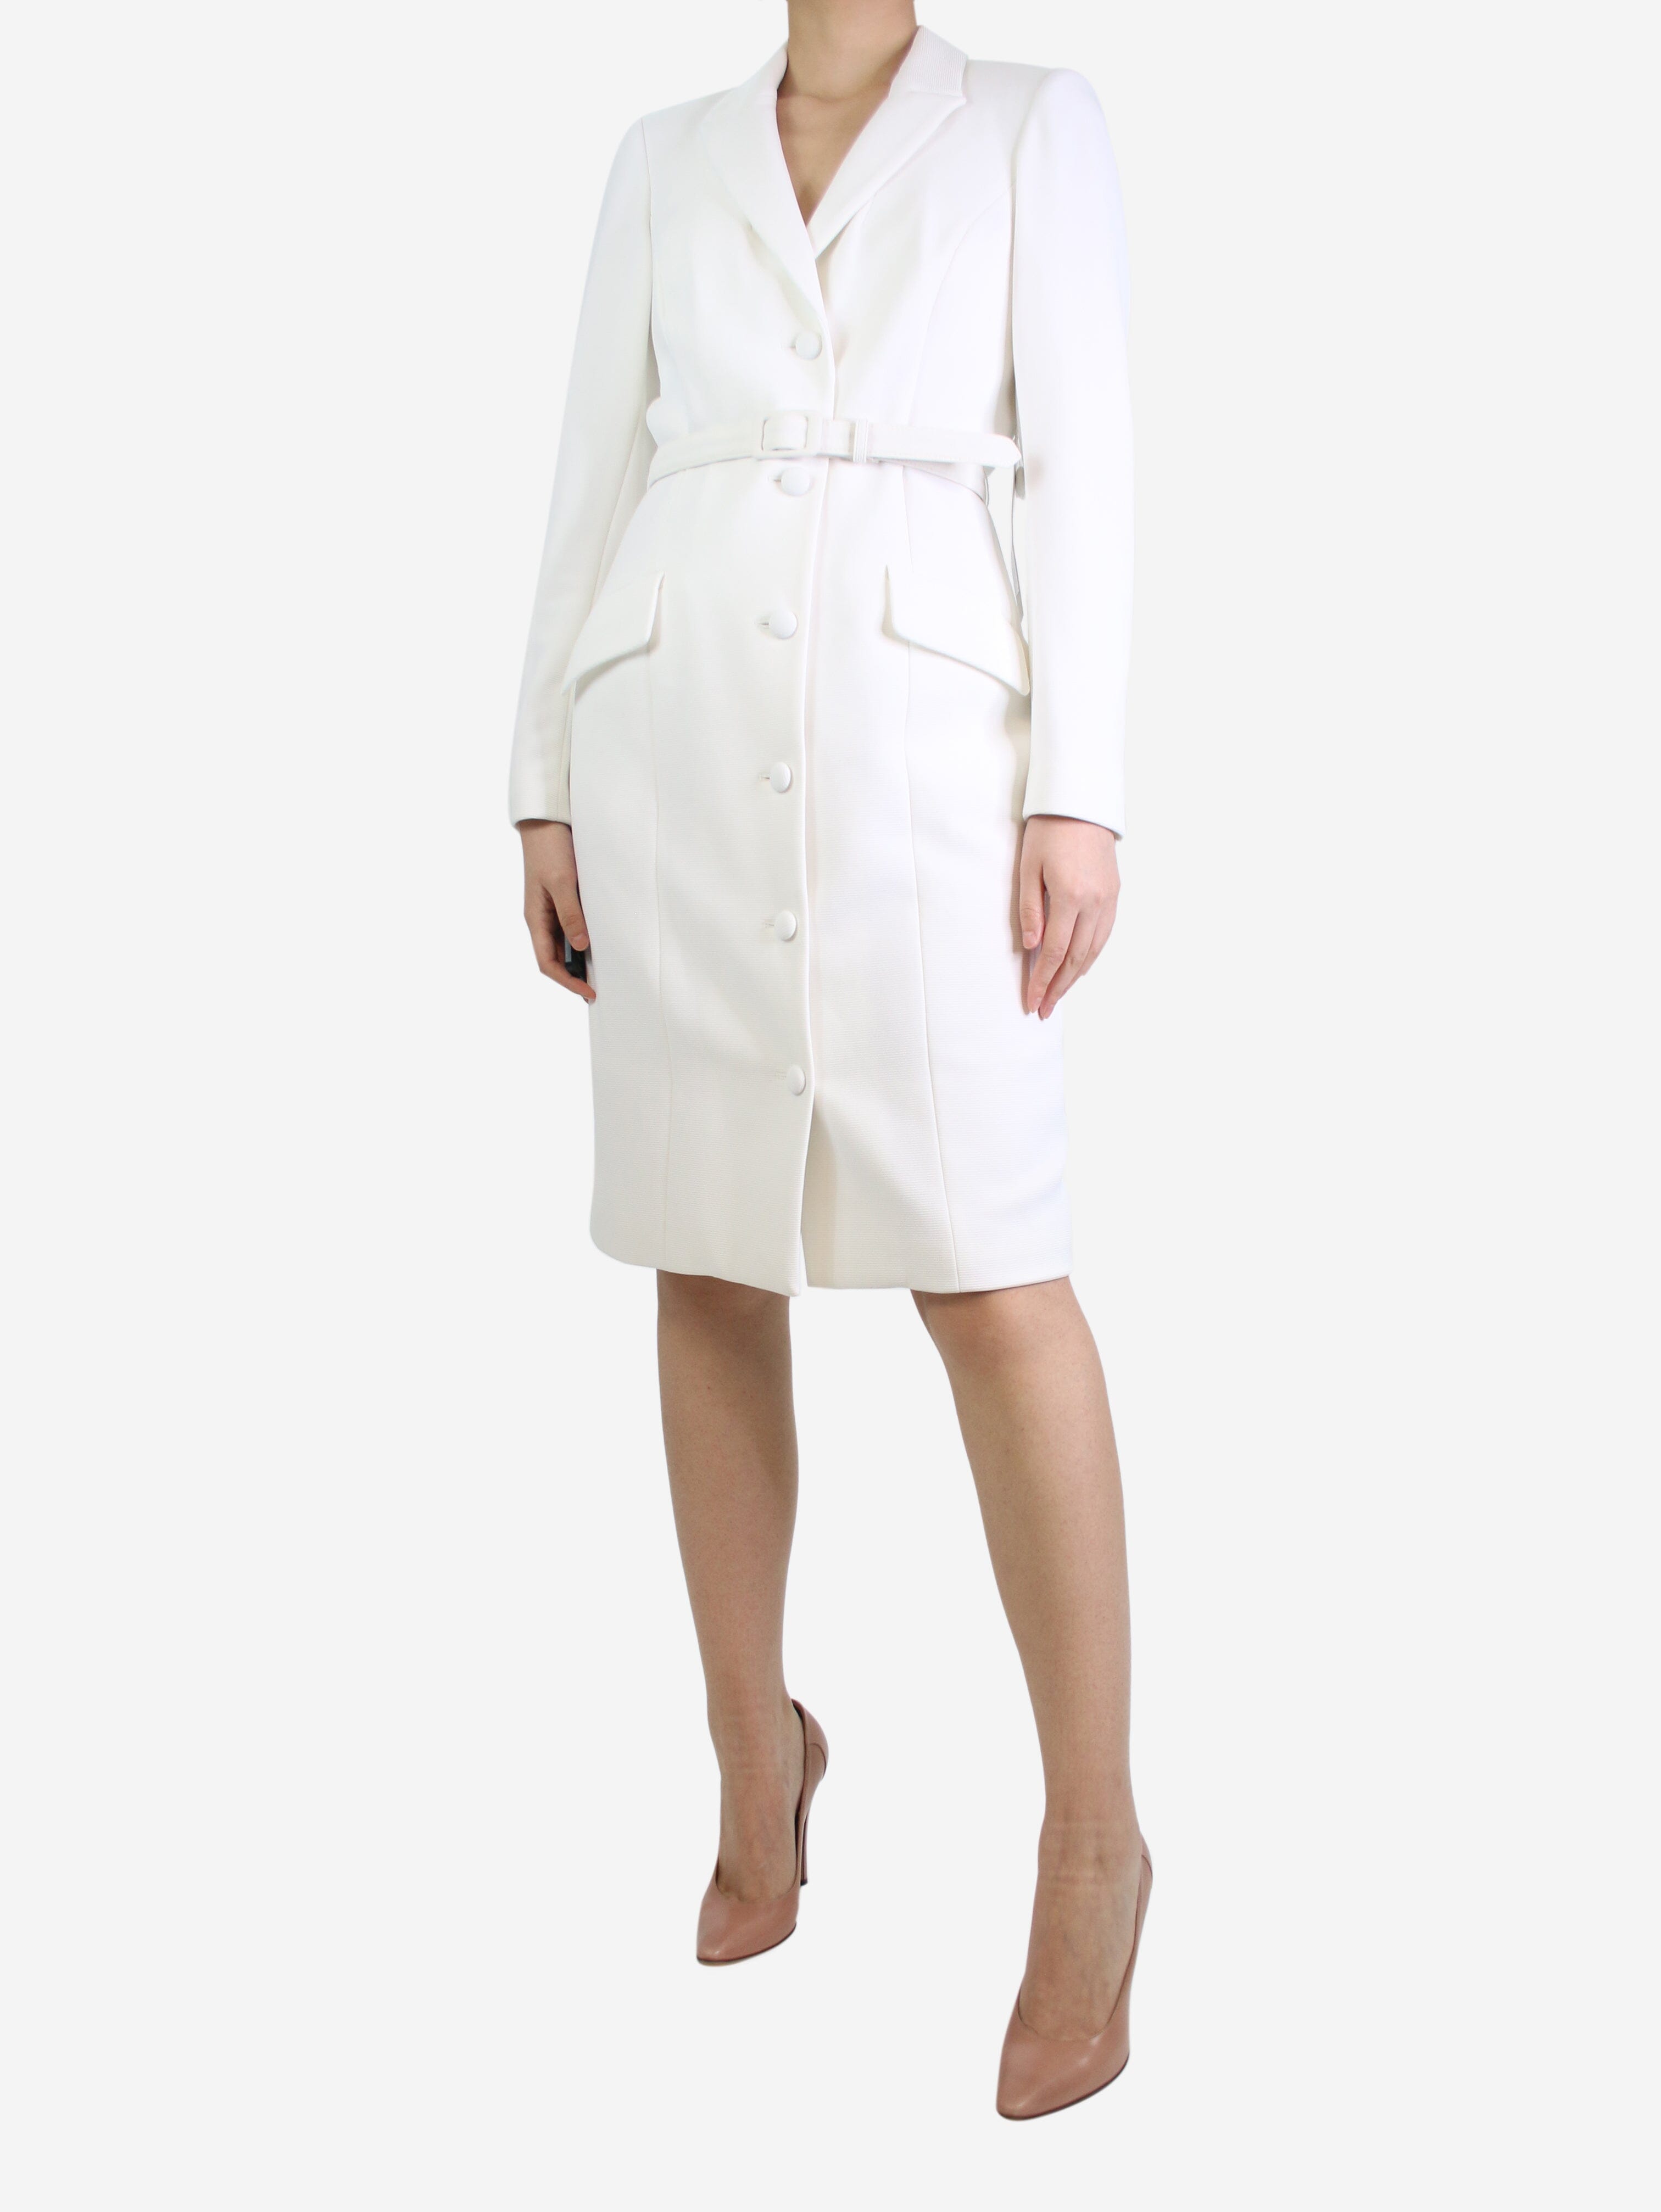 White belted longline blazer dress- size UK 10